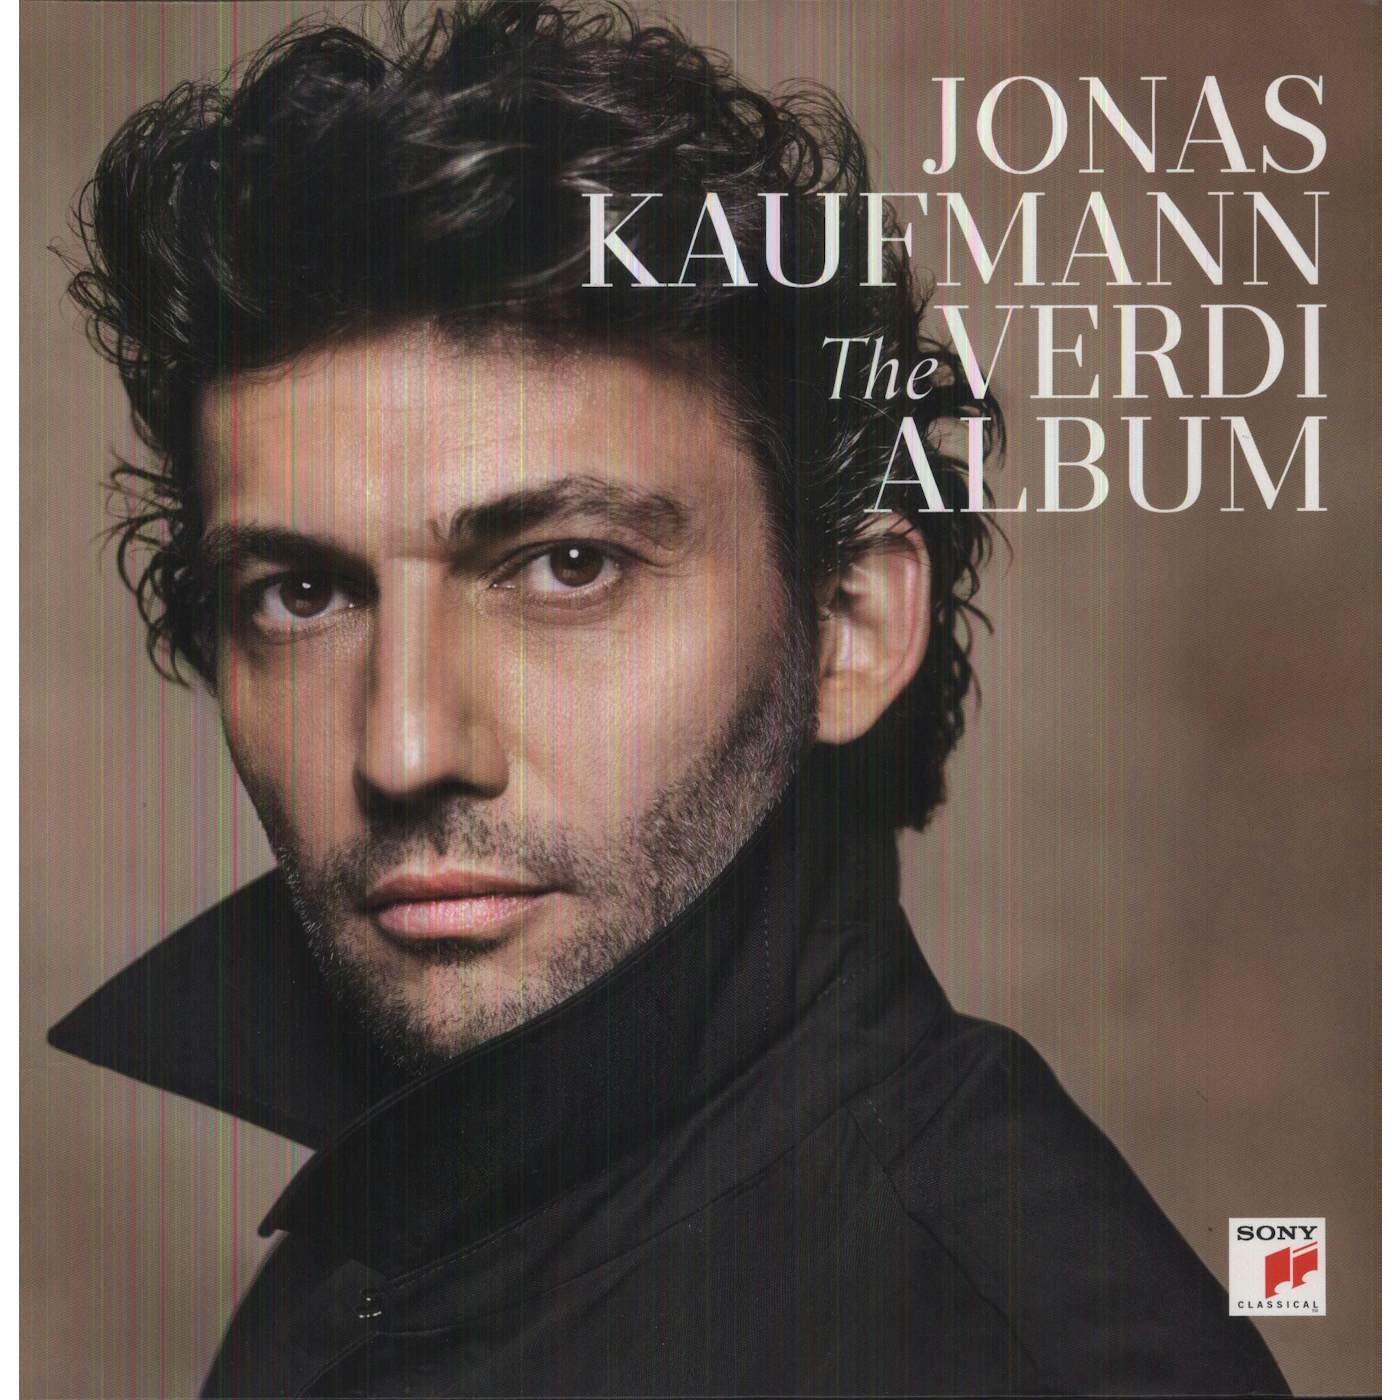 Jonas Kaufmann VERDI ALBUM Vinyl Record